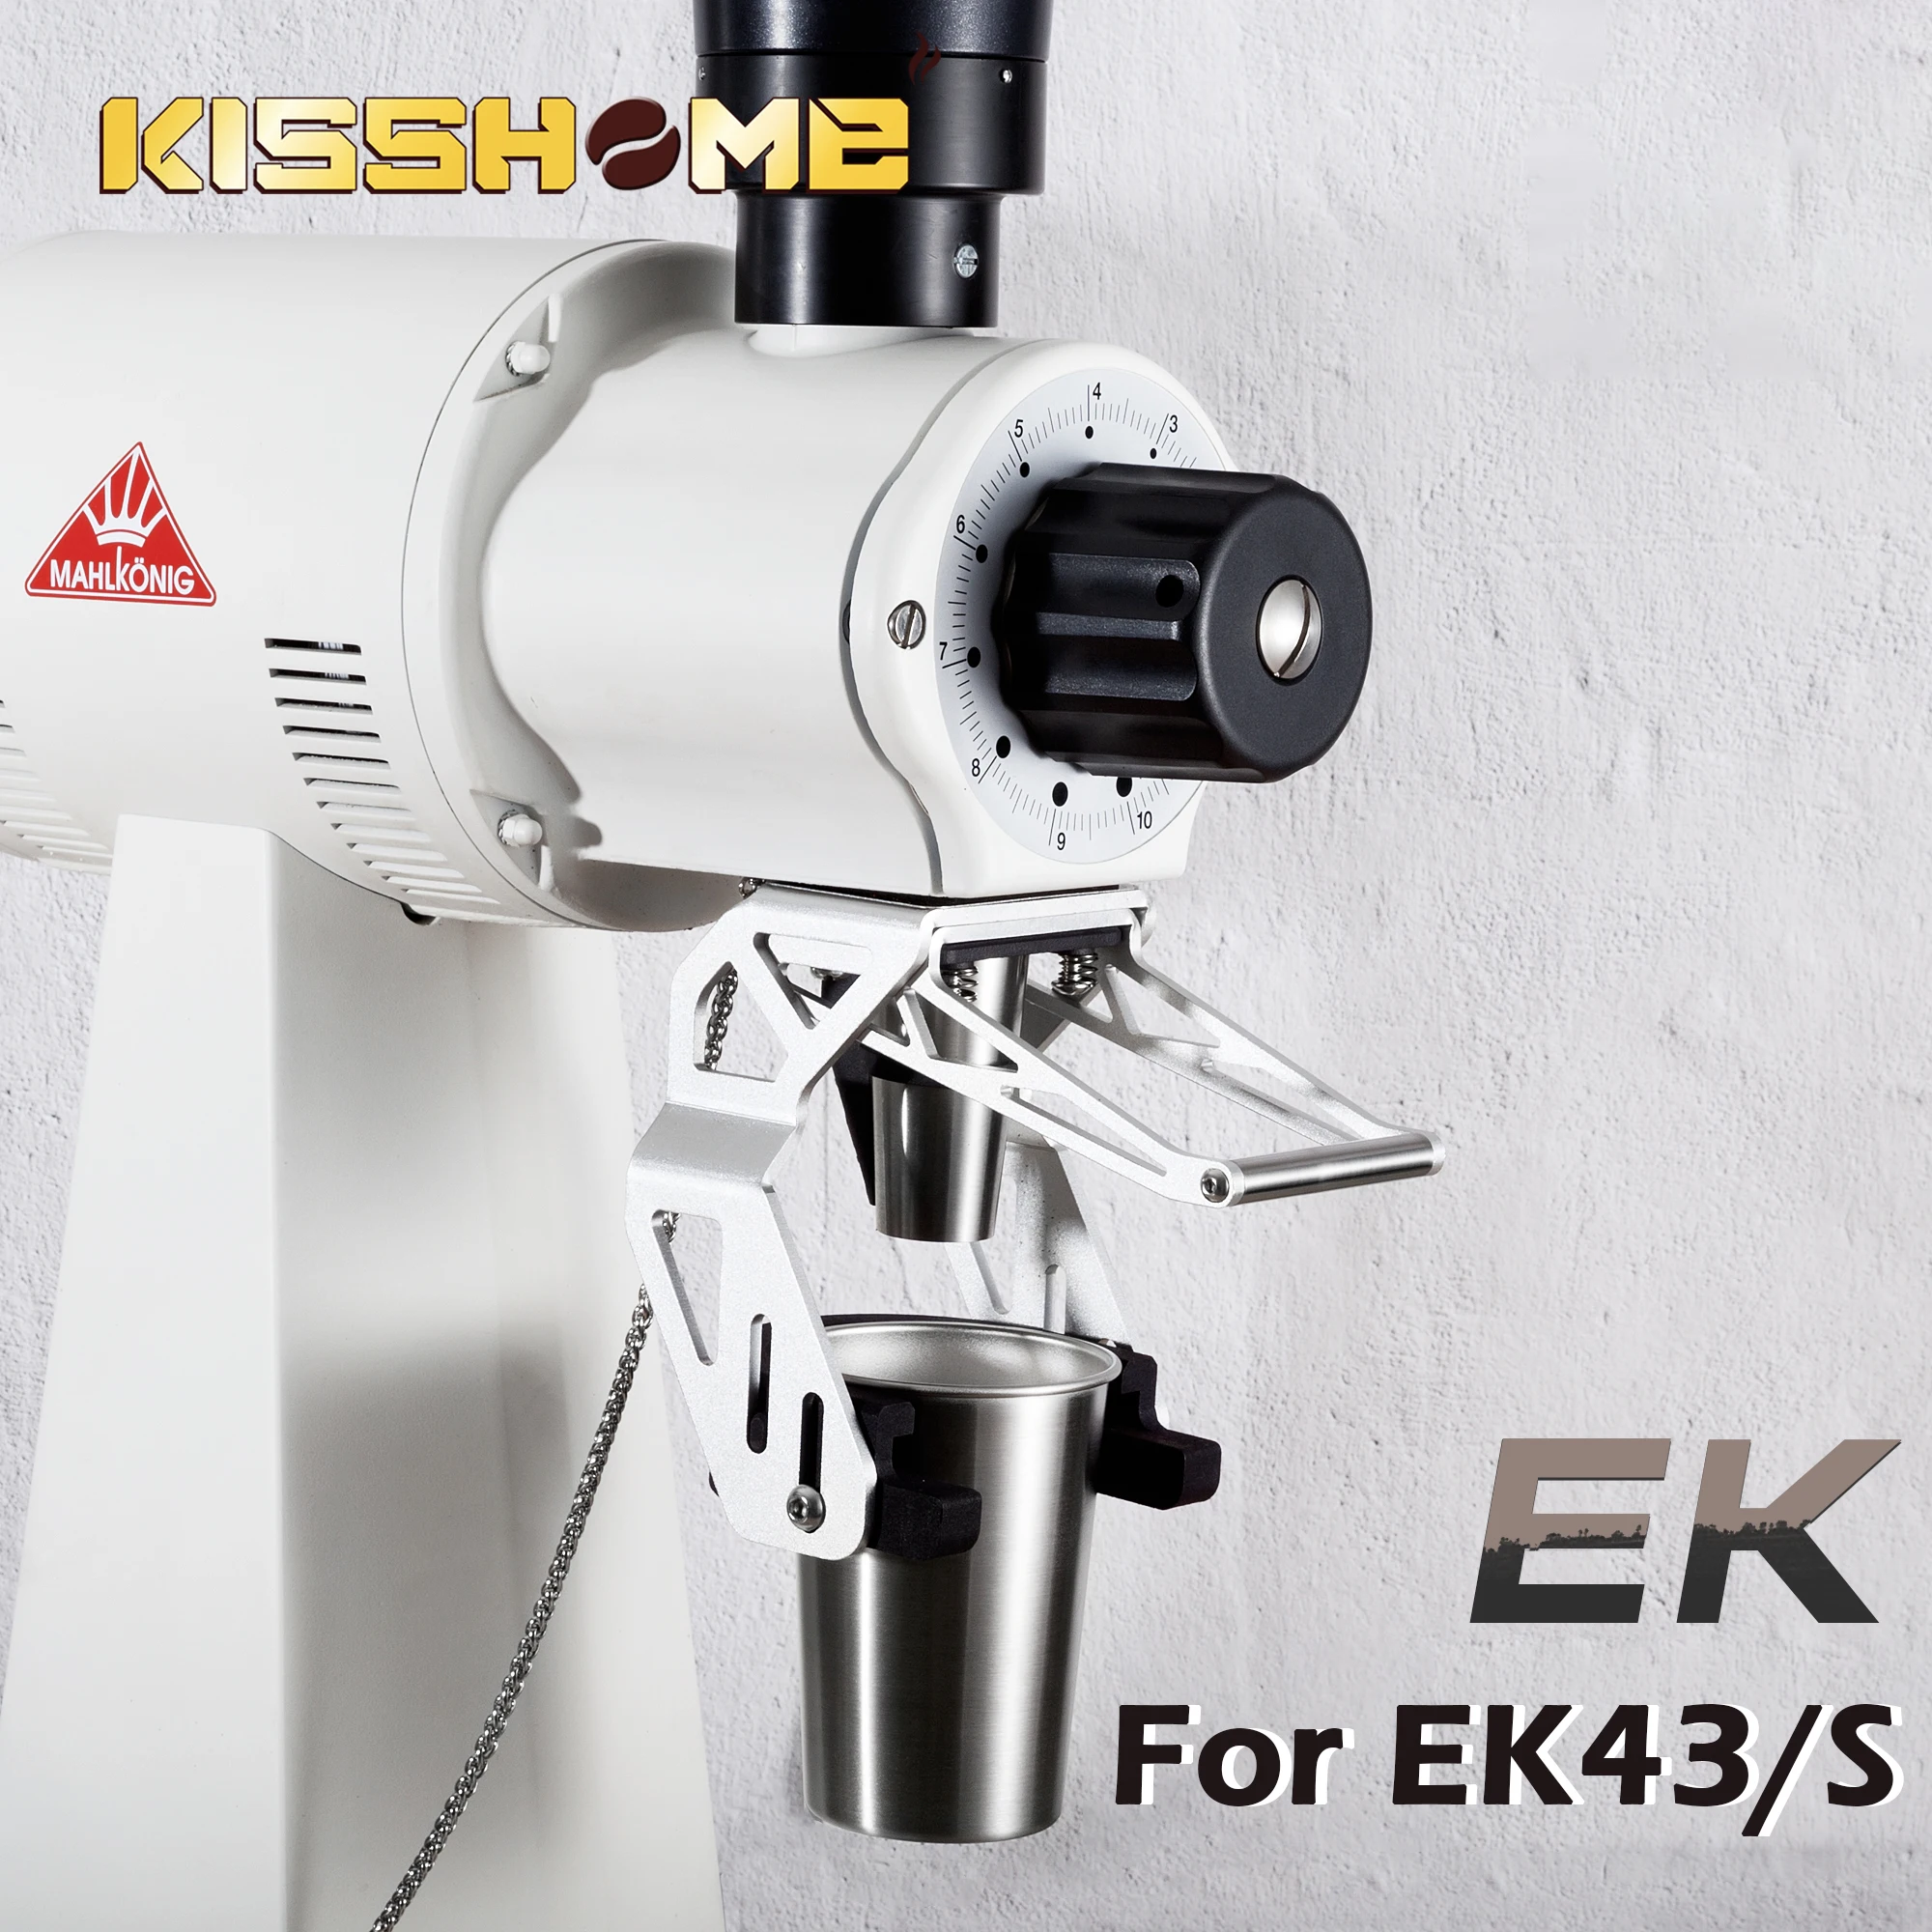 Mahlkonig ek43/s 304ステンレス鋼エスプレッソバリスタコーヒーツール用ekグラインダーアクセサリー